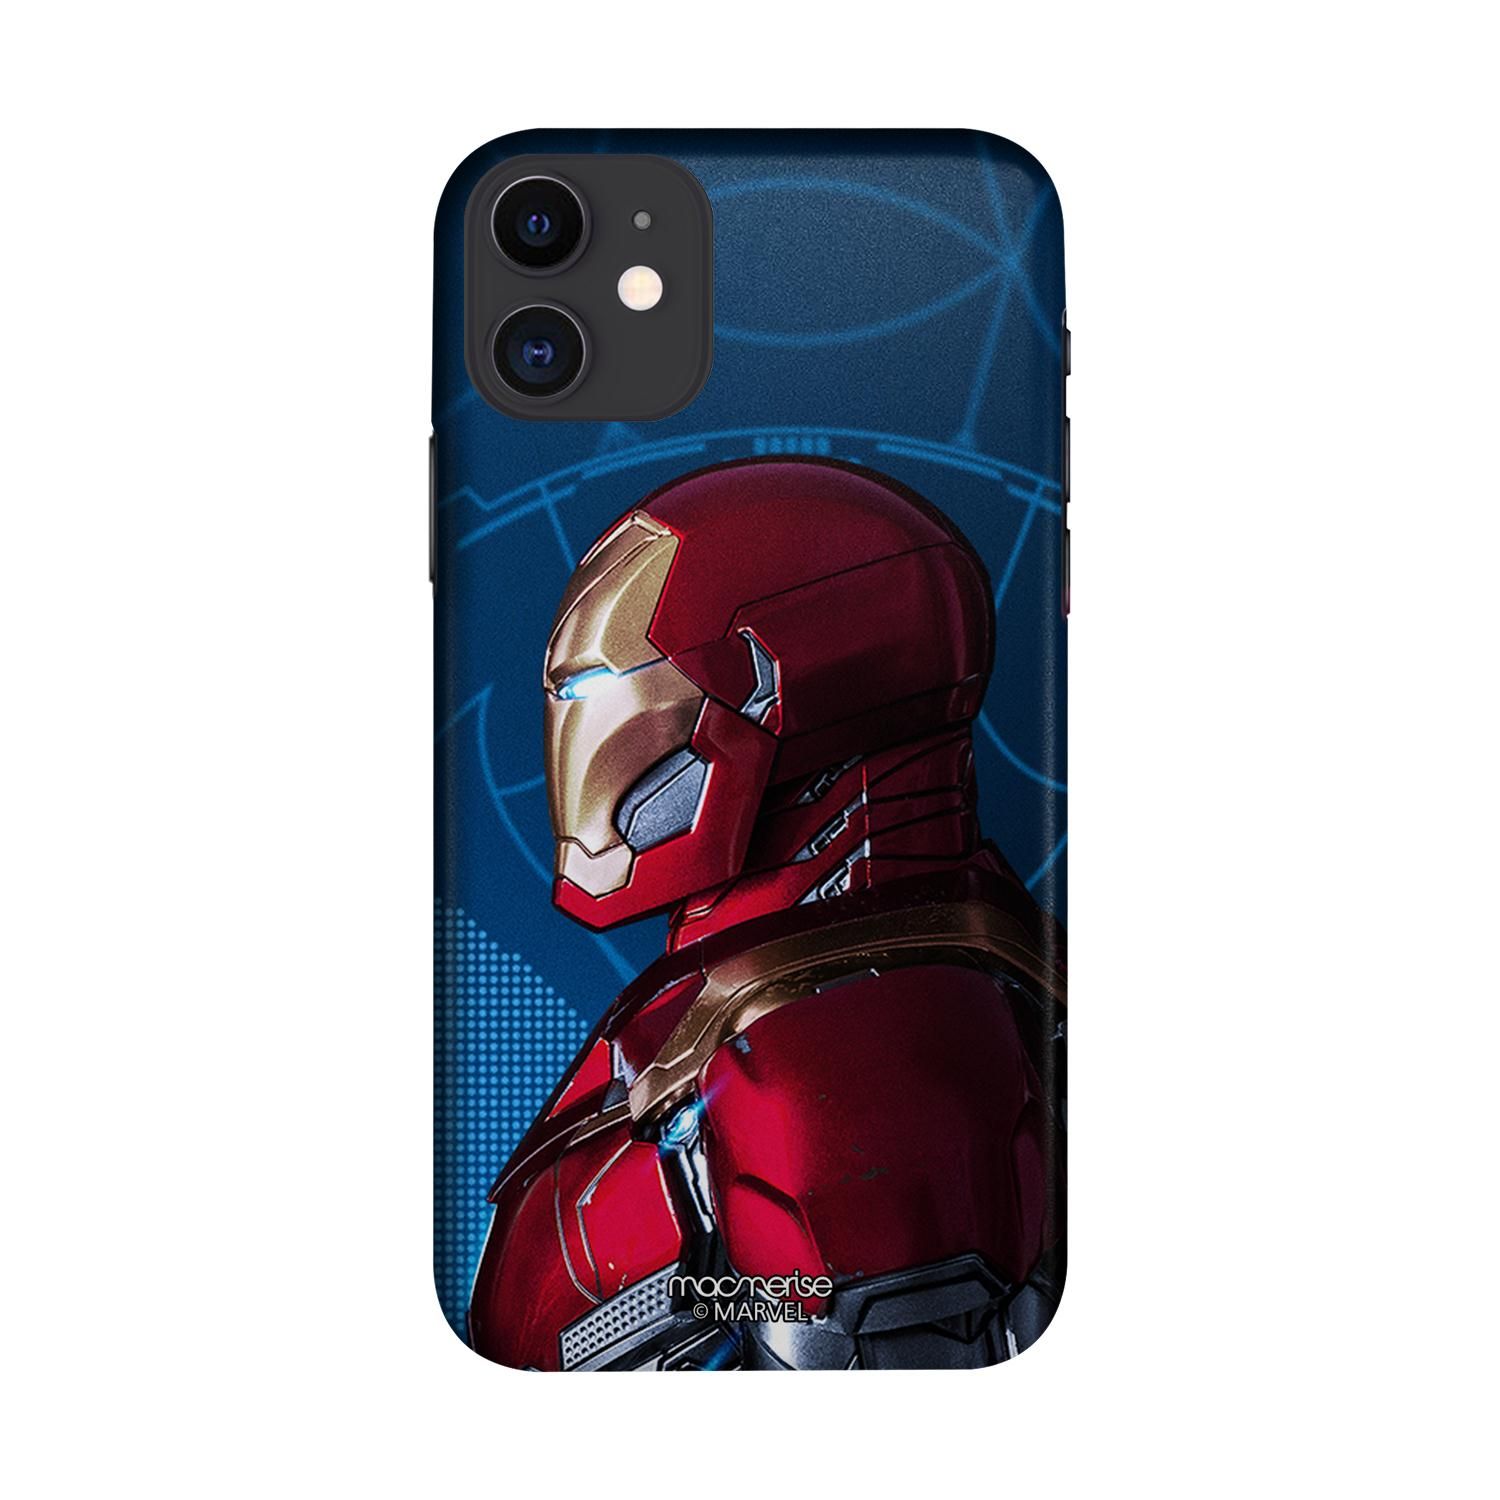 Buy Iron Man side Armor - Sleek Phone Case for iPhone 11 Online